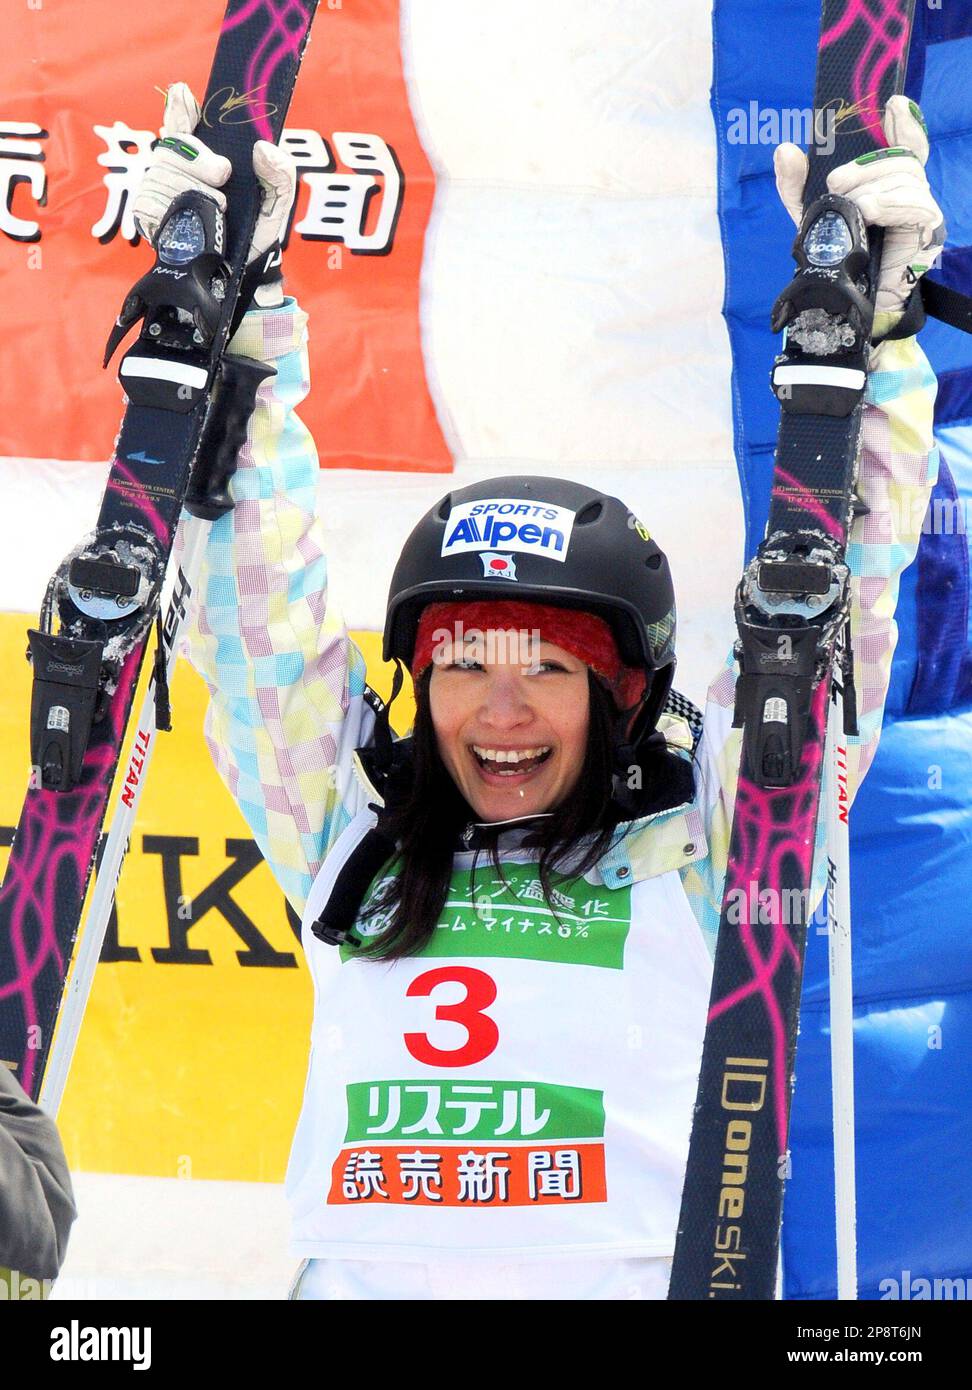 Japan's Aiko Uemura celebrates after winning the women's moguls finals of the FIS Freestyle World Championships in Inawashiro, Japan, Saturday, March 7, 2009. (AP Photo/Katsumi Kasahara) Stock Photo